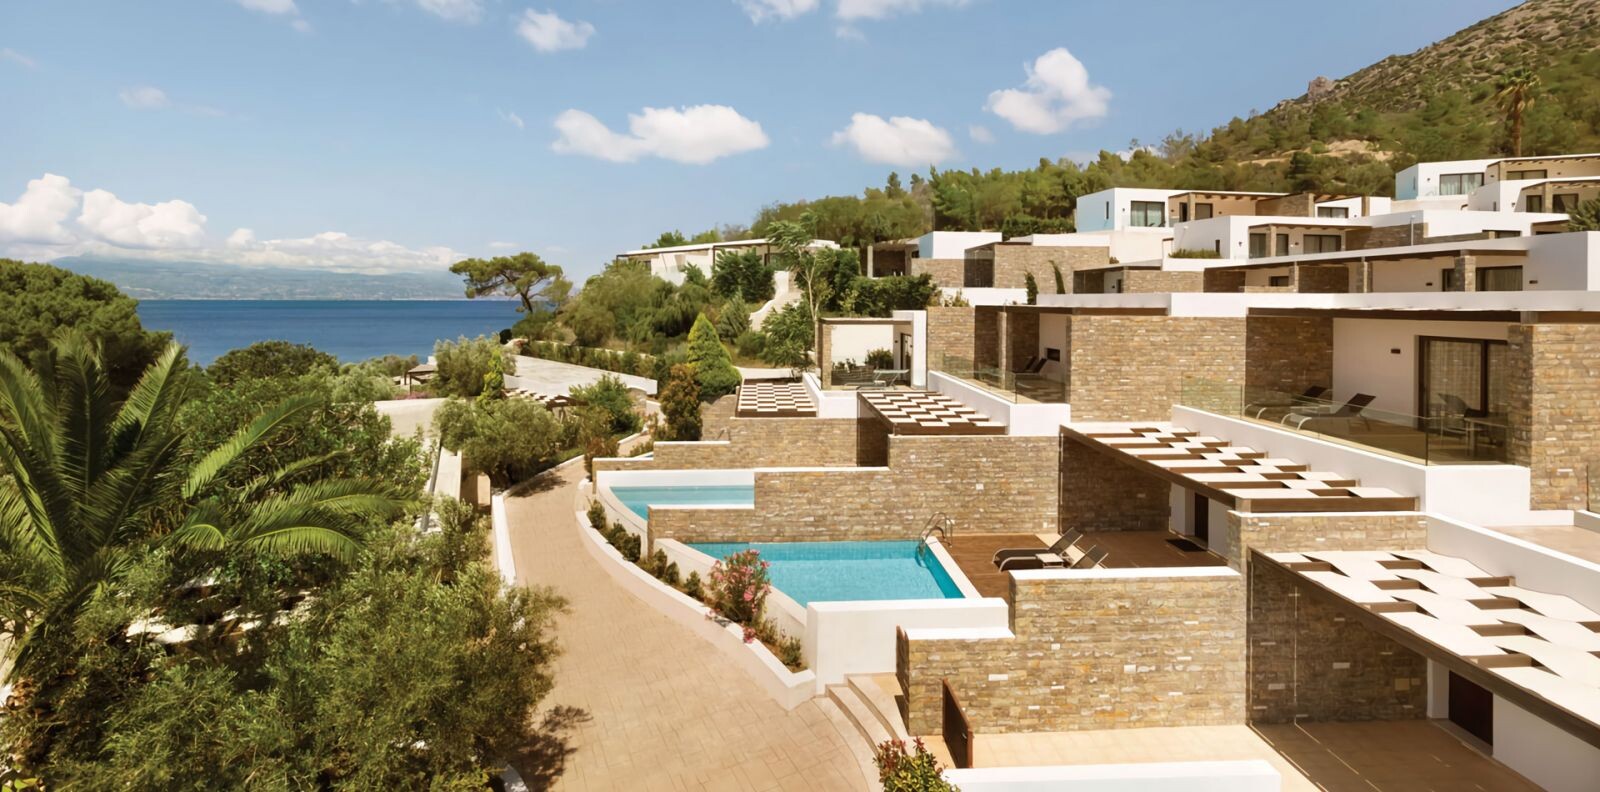 More information about "Δεκαπέντε νέα ξενοδοχεία σχεδιάζει για την Ελλάδα η Wyndham"